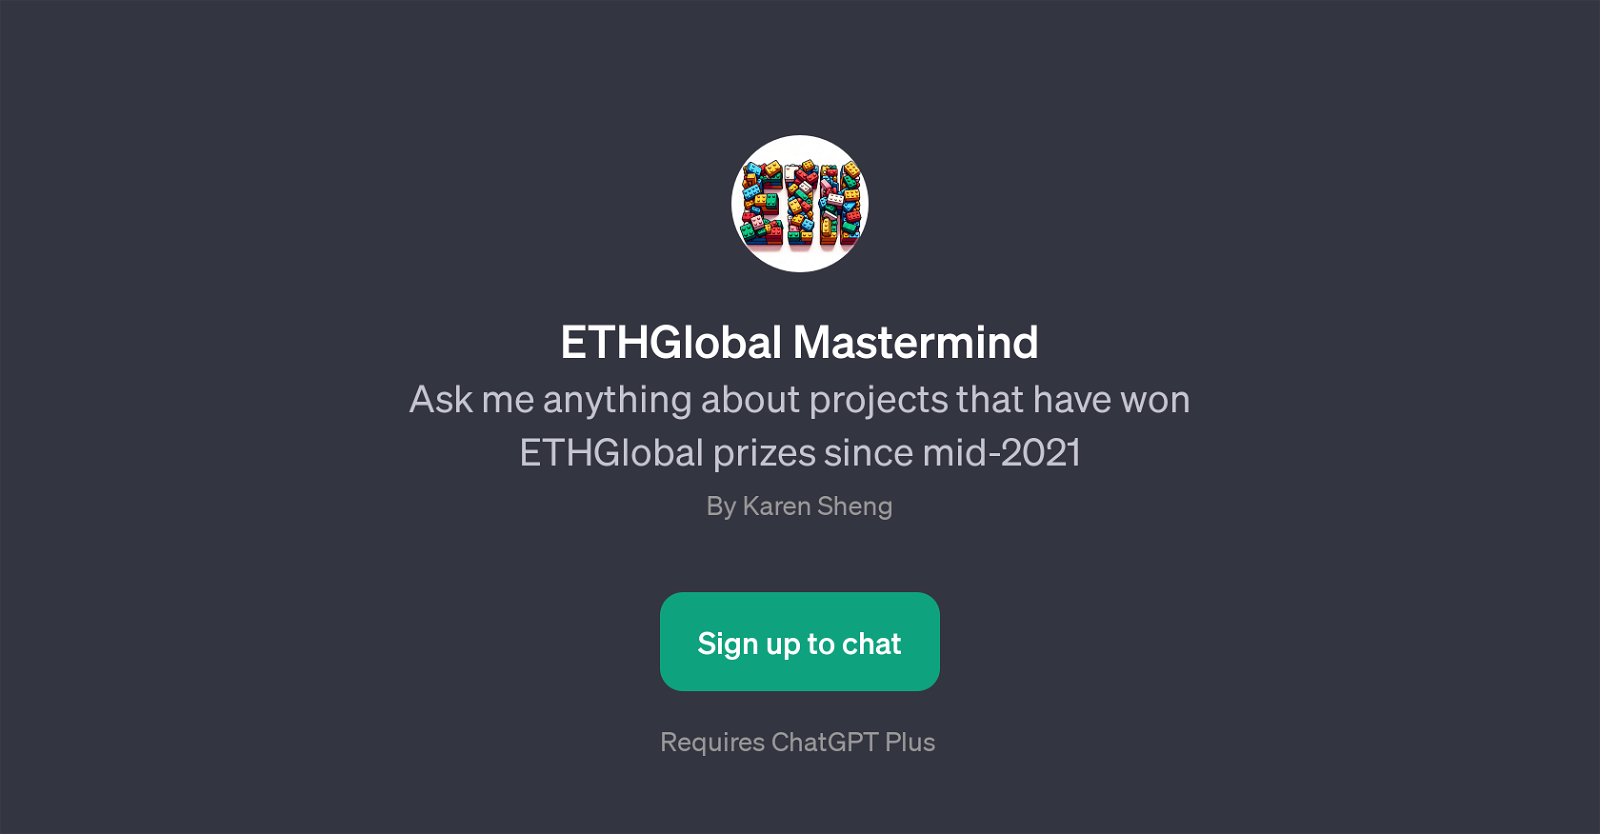 ETHGlobal Mastermind website